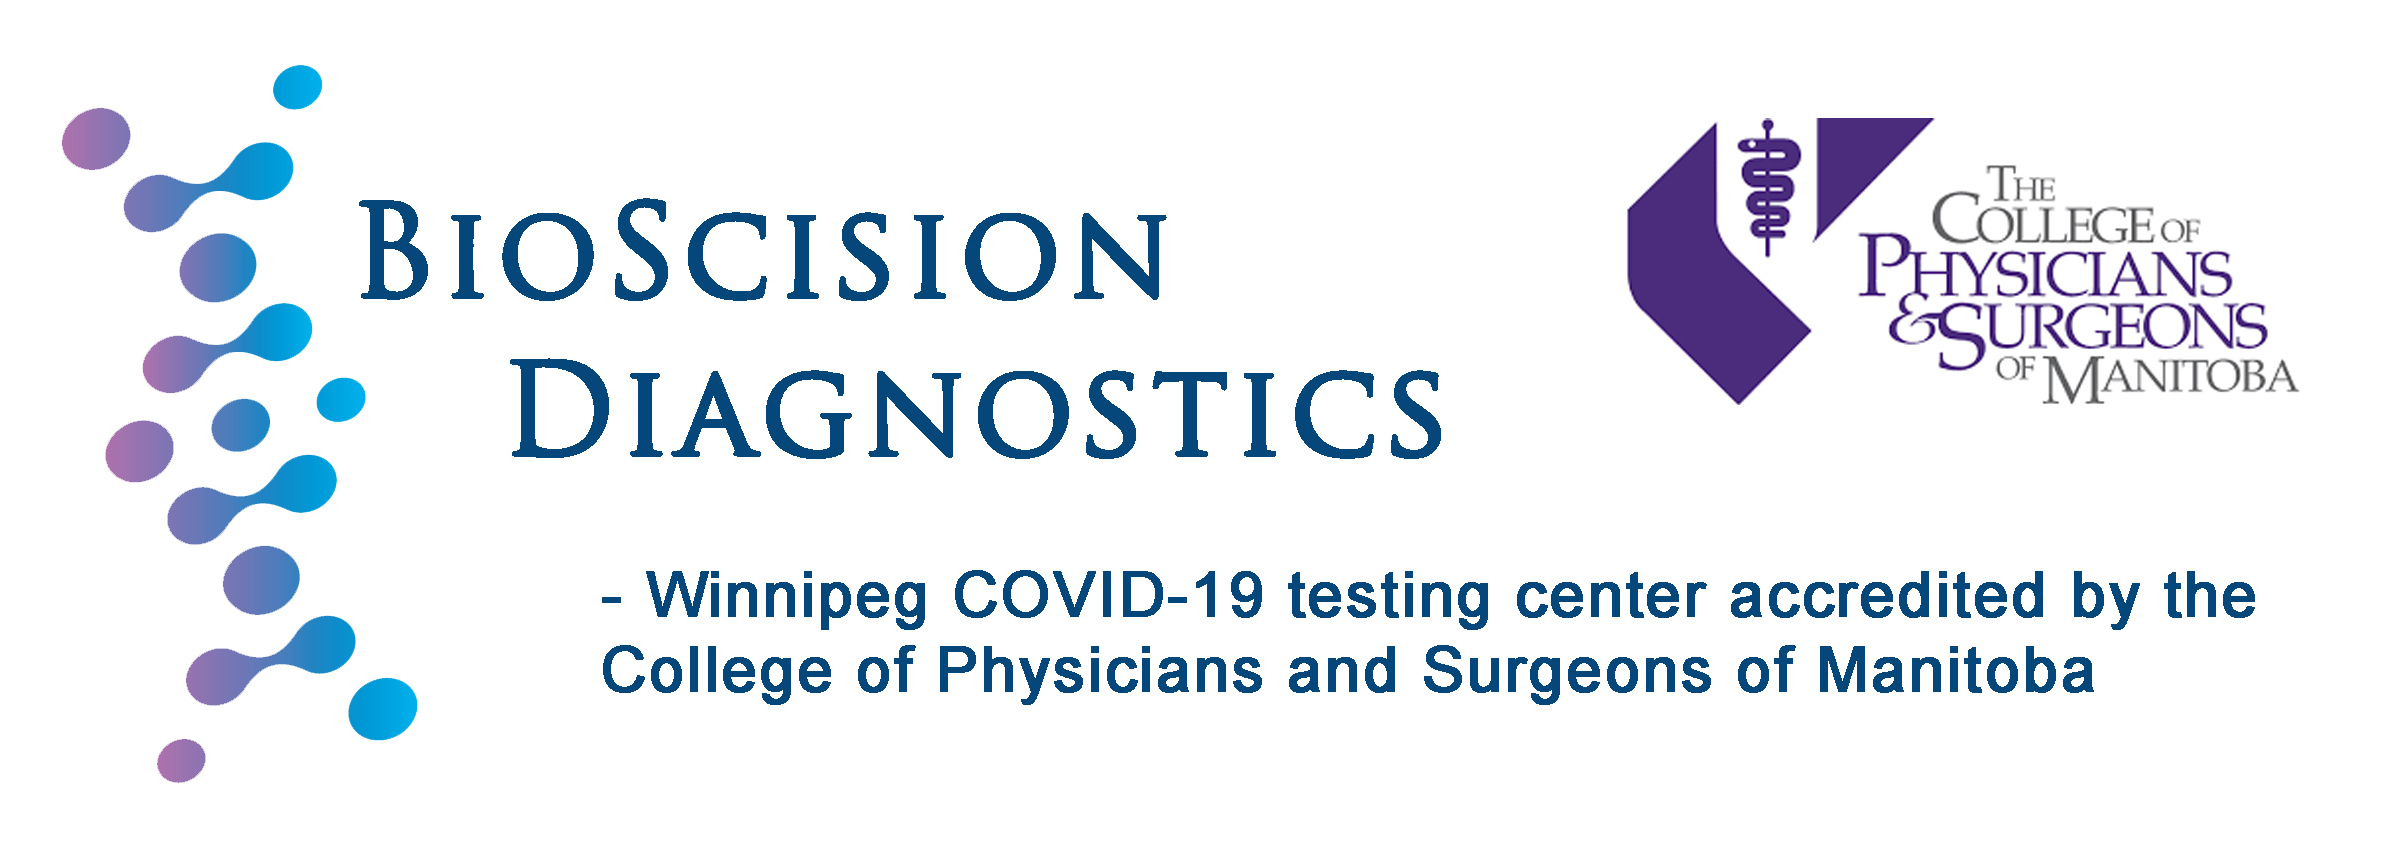 Bioscision Diagnostics.jpeg (607 KB)